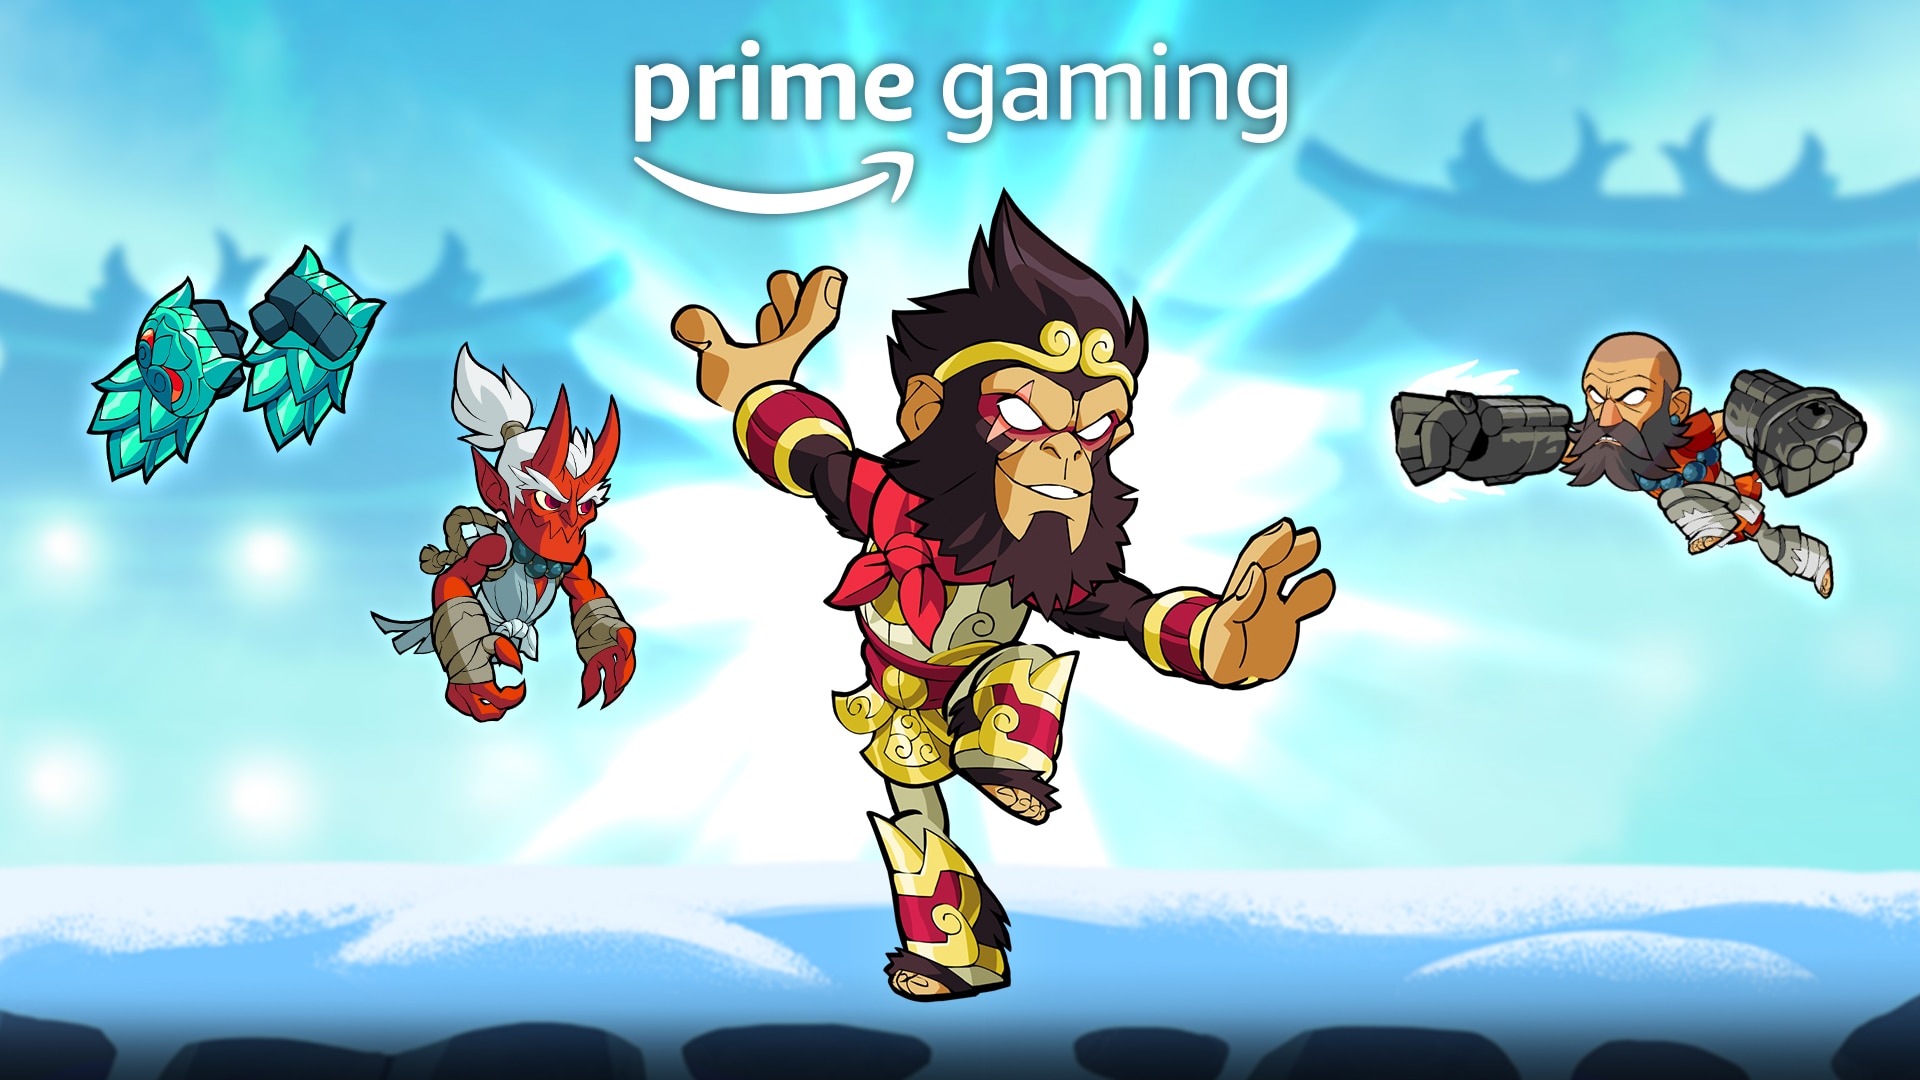 Get the Shogun Bundle with Prime Gaming